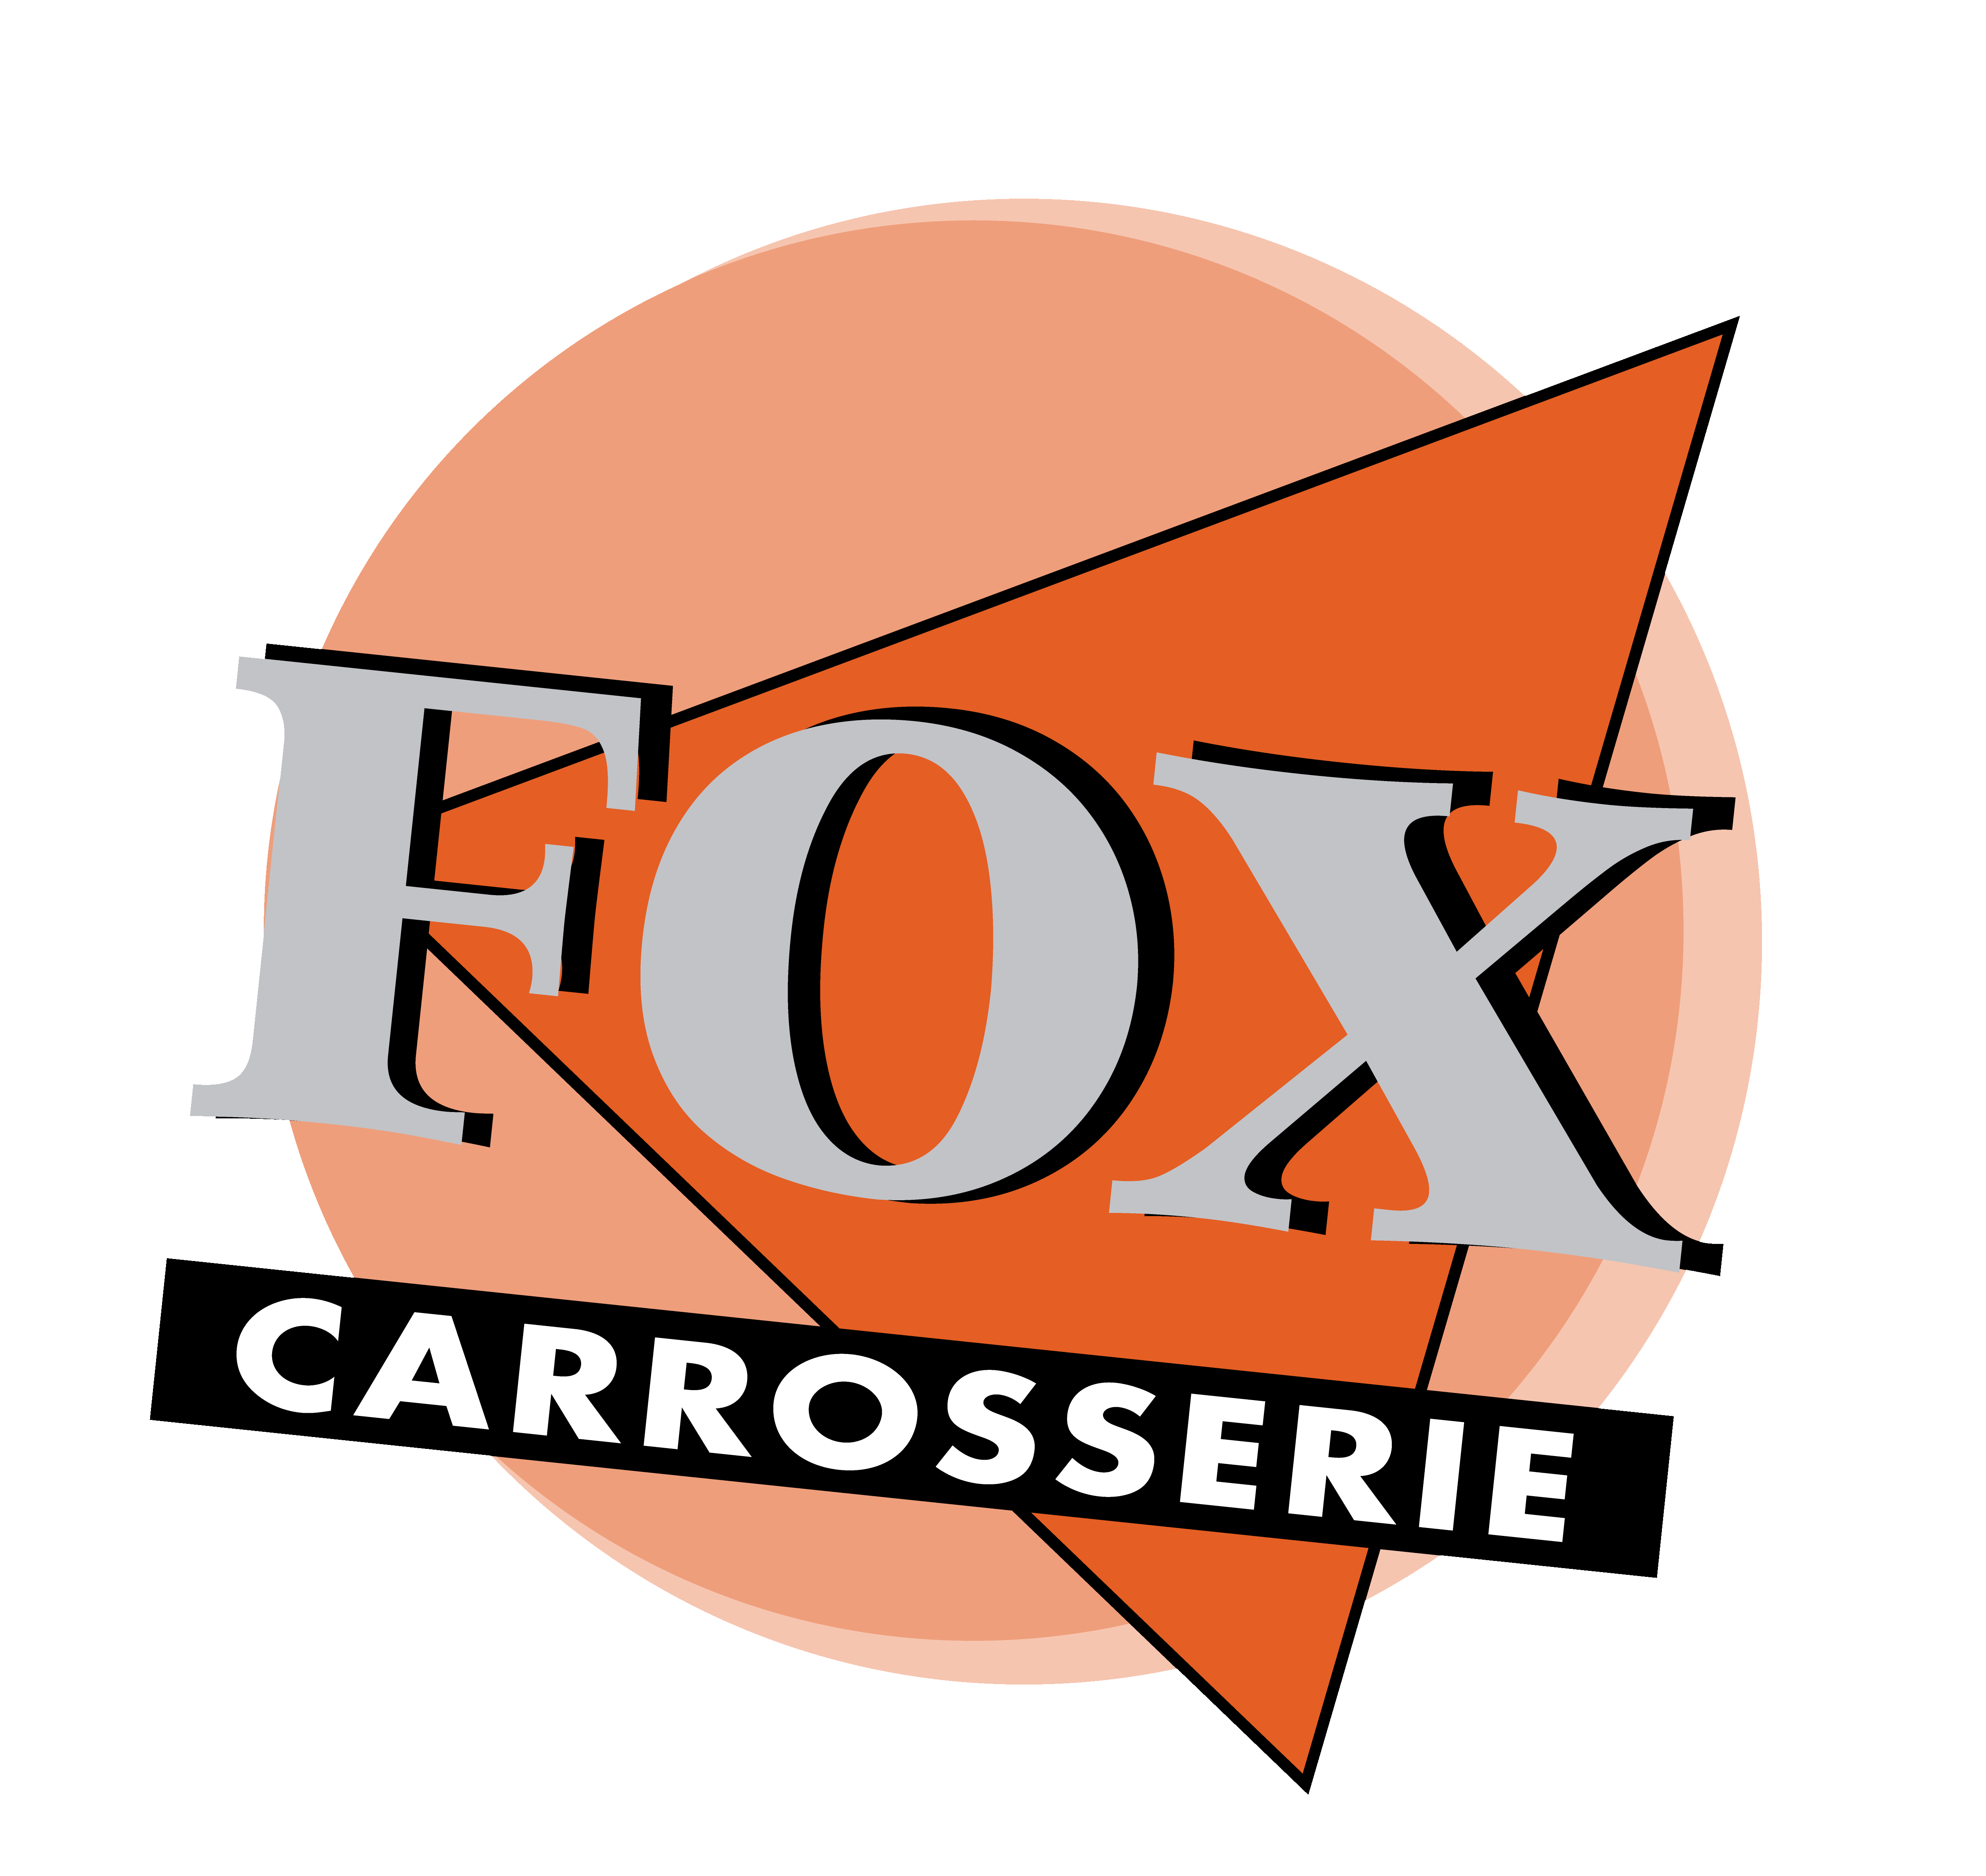 CARROSSERIE FOX